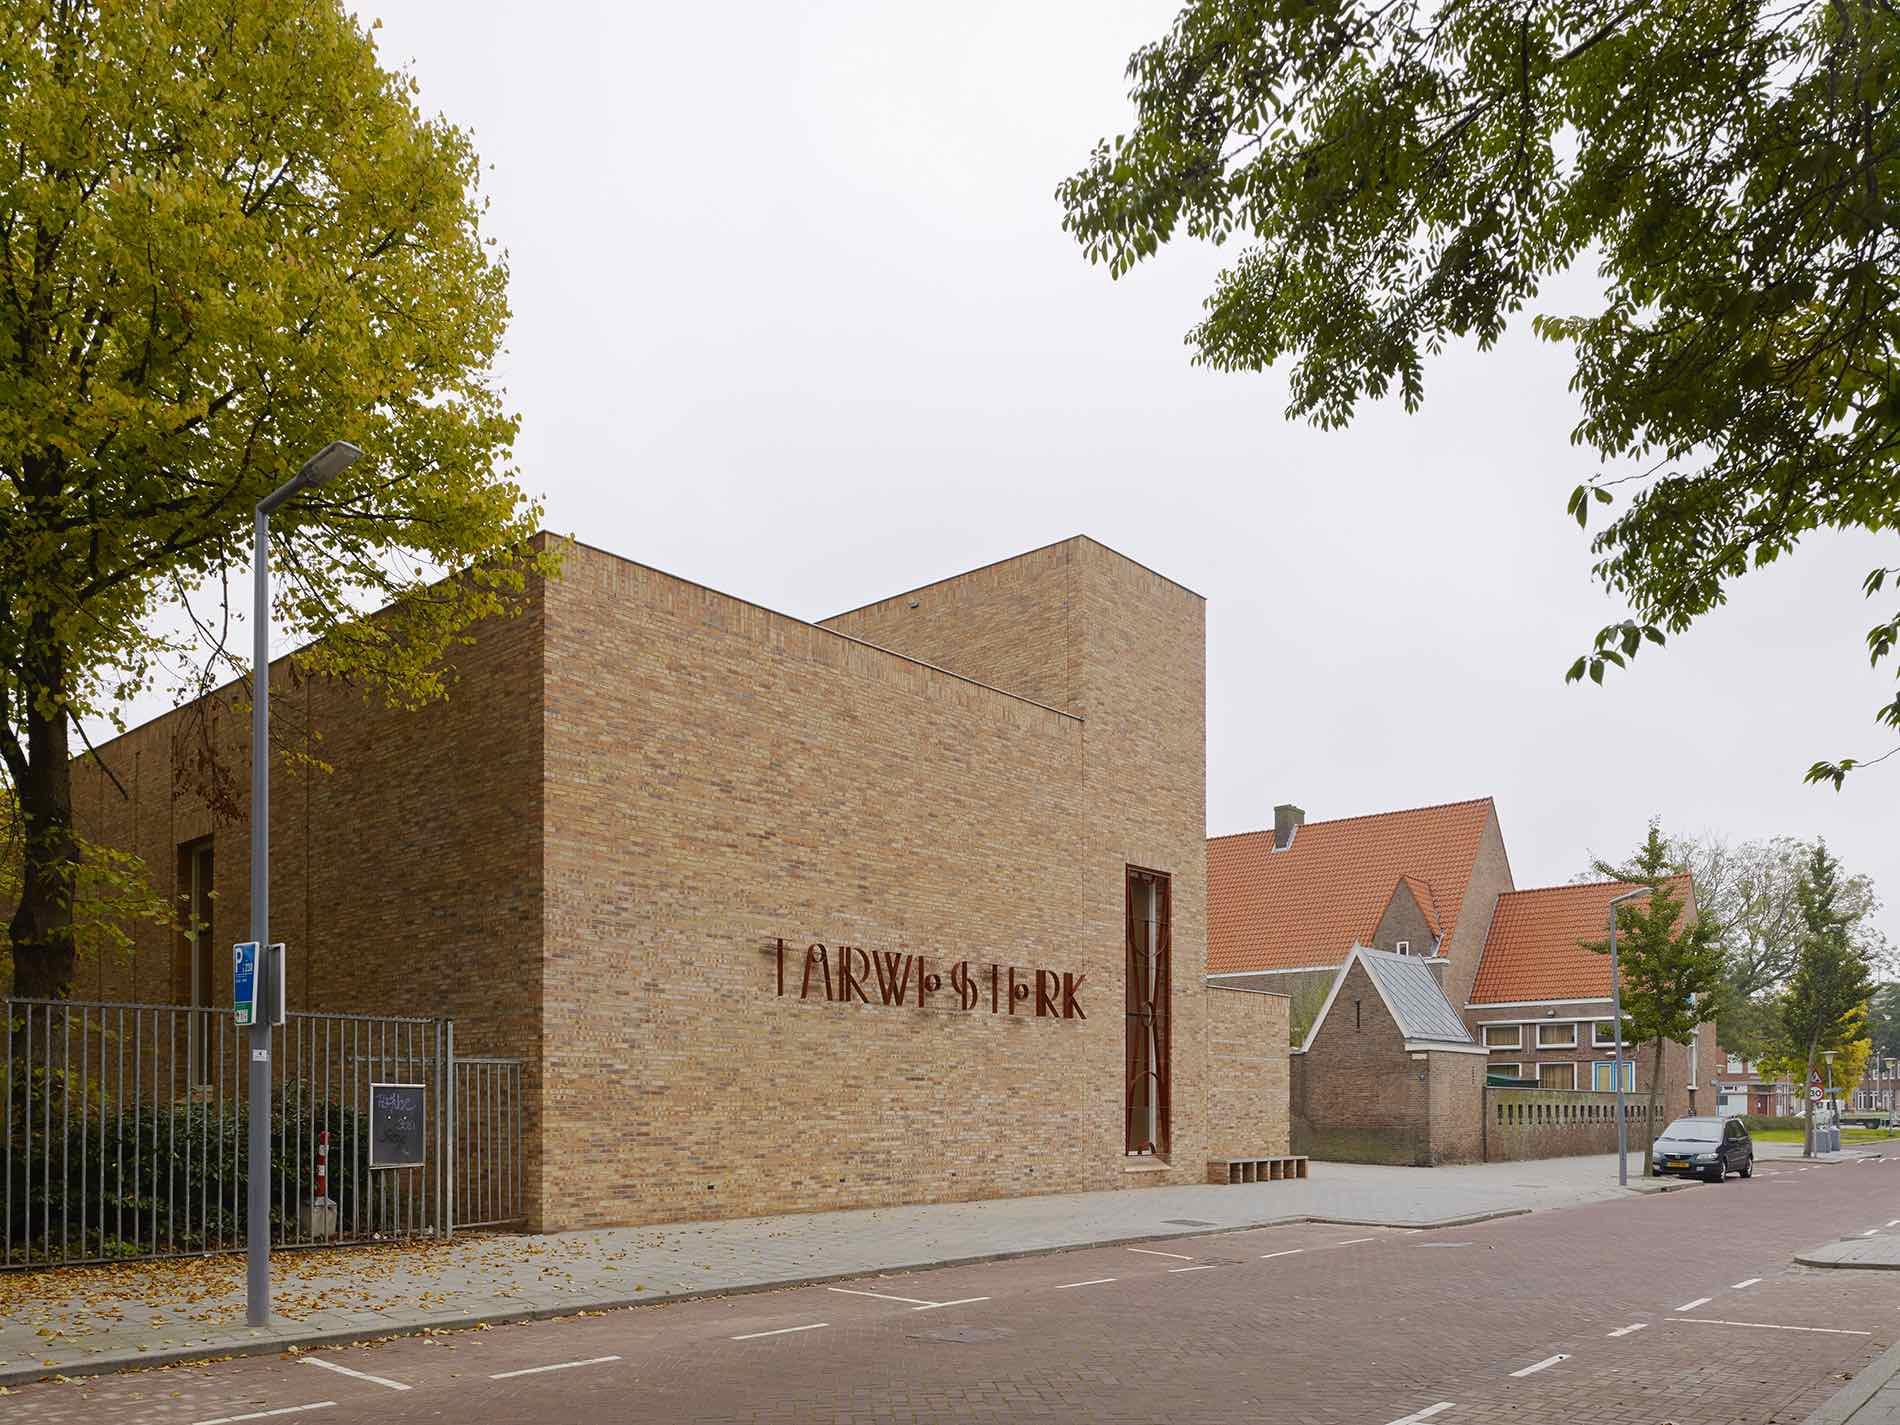 Sporthal Tawesterk 2, Rotterdam - Artesk van Royen Architecten - Ziegler Branderhorst